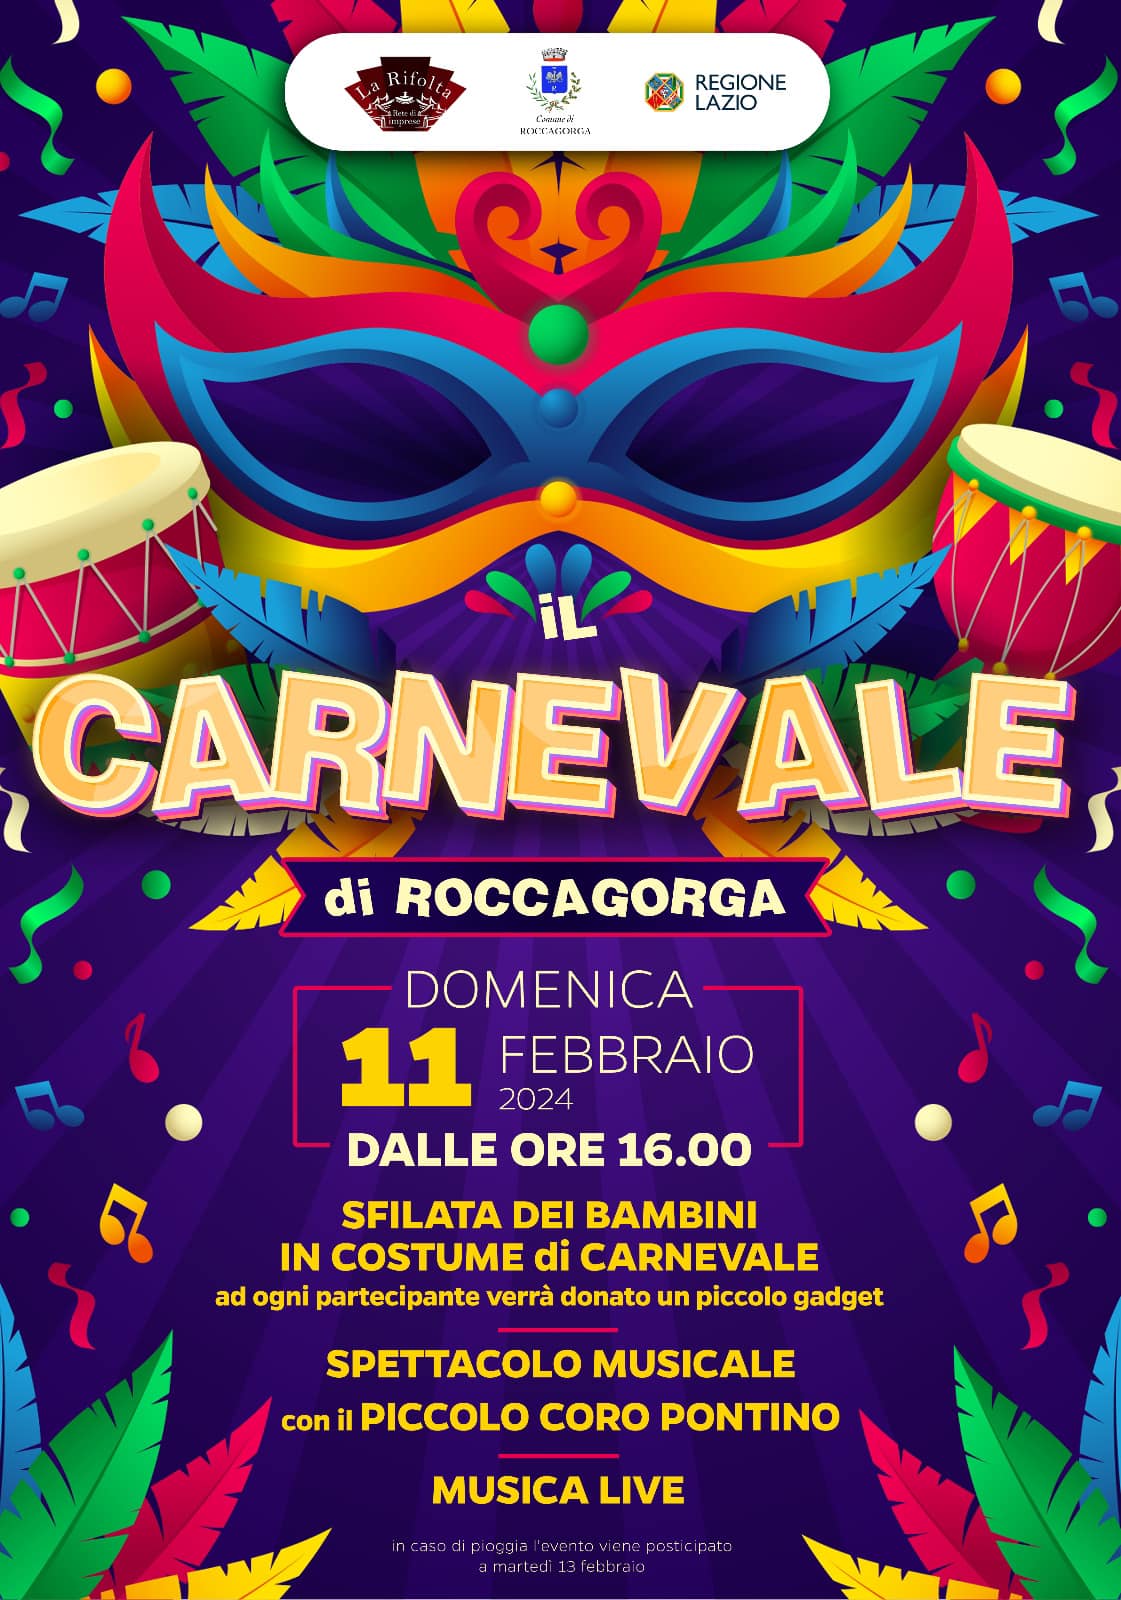 Roccagorga: il Carnevale di Roccagorga @ Roccagorga